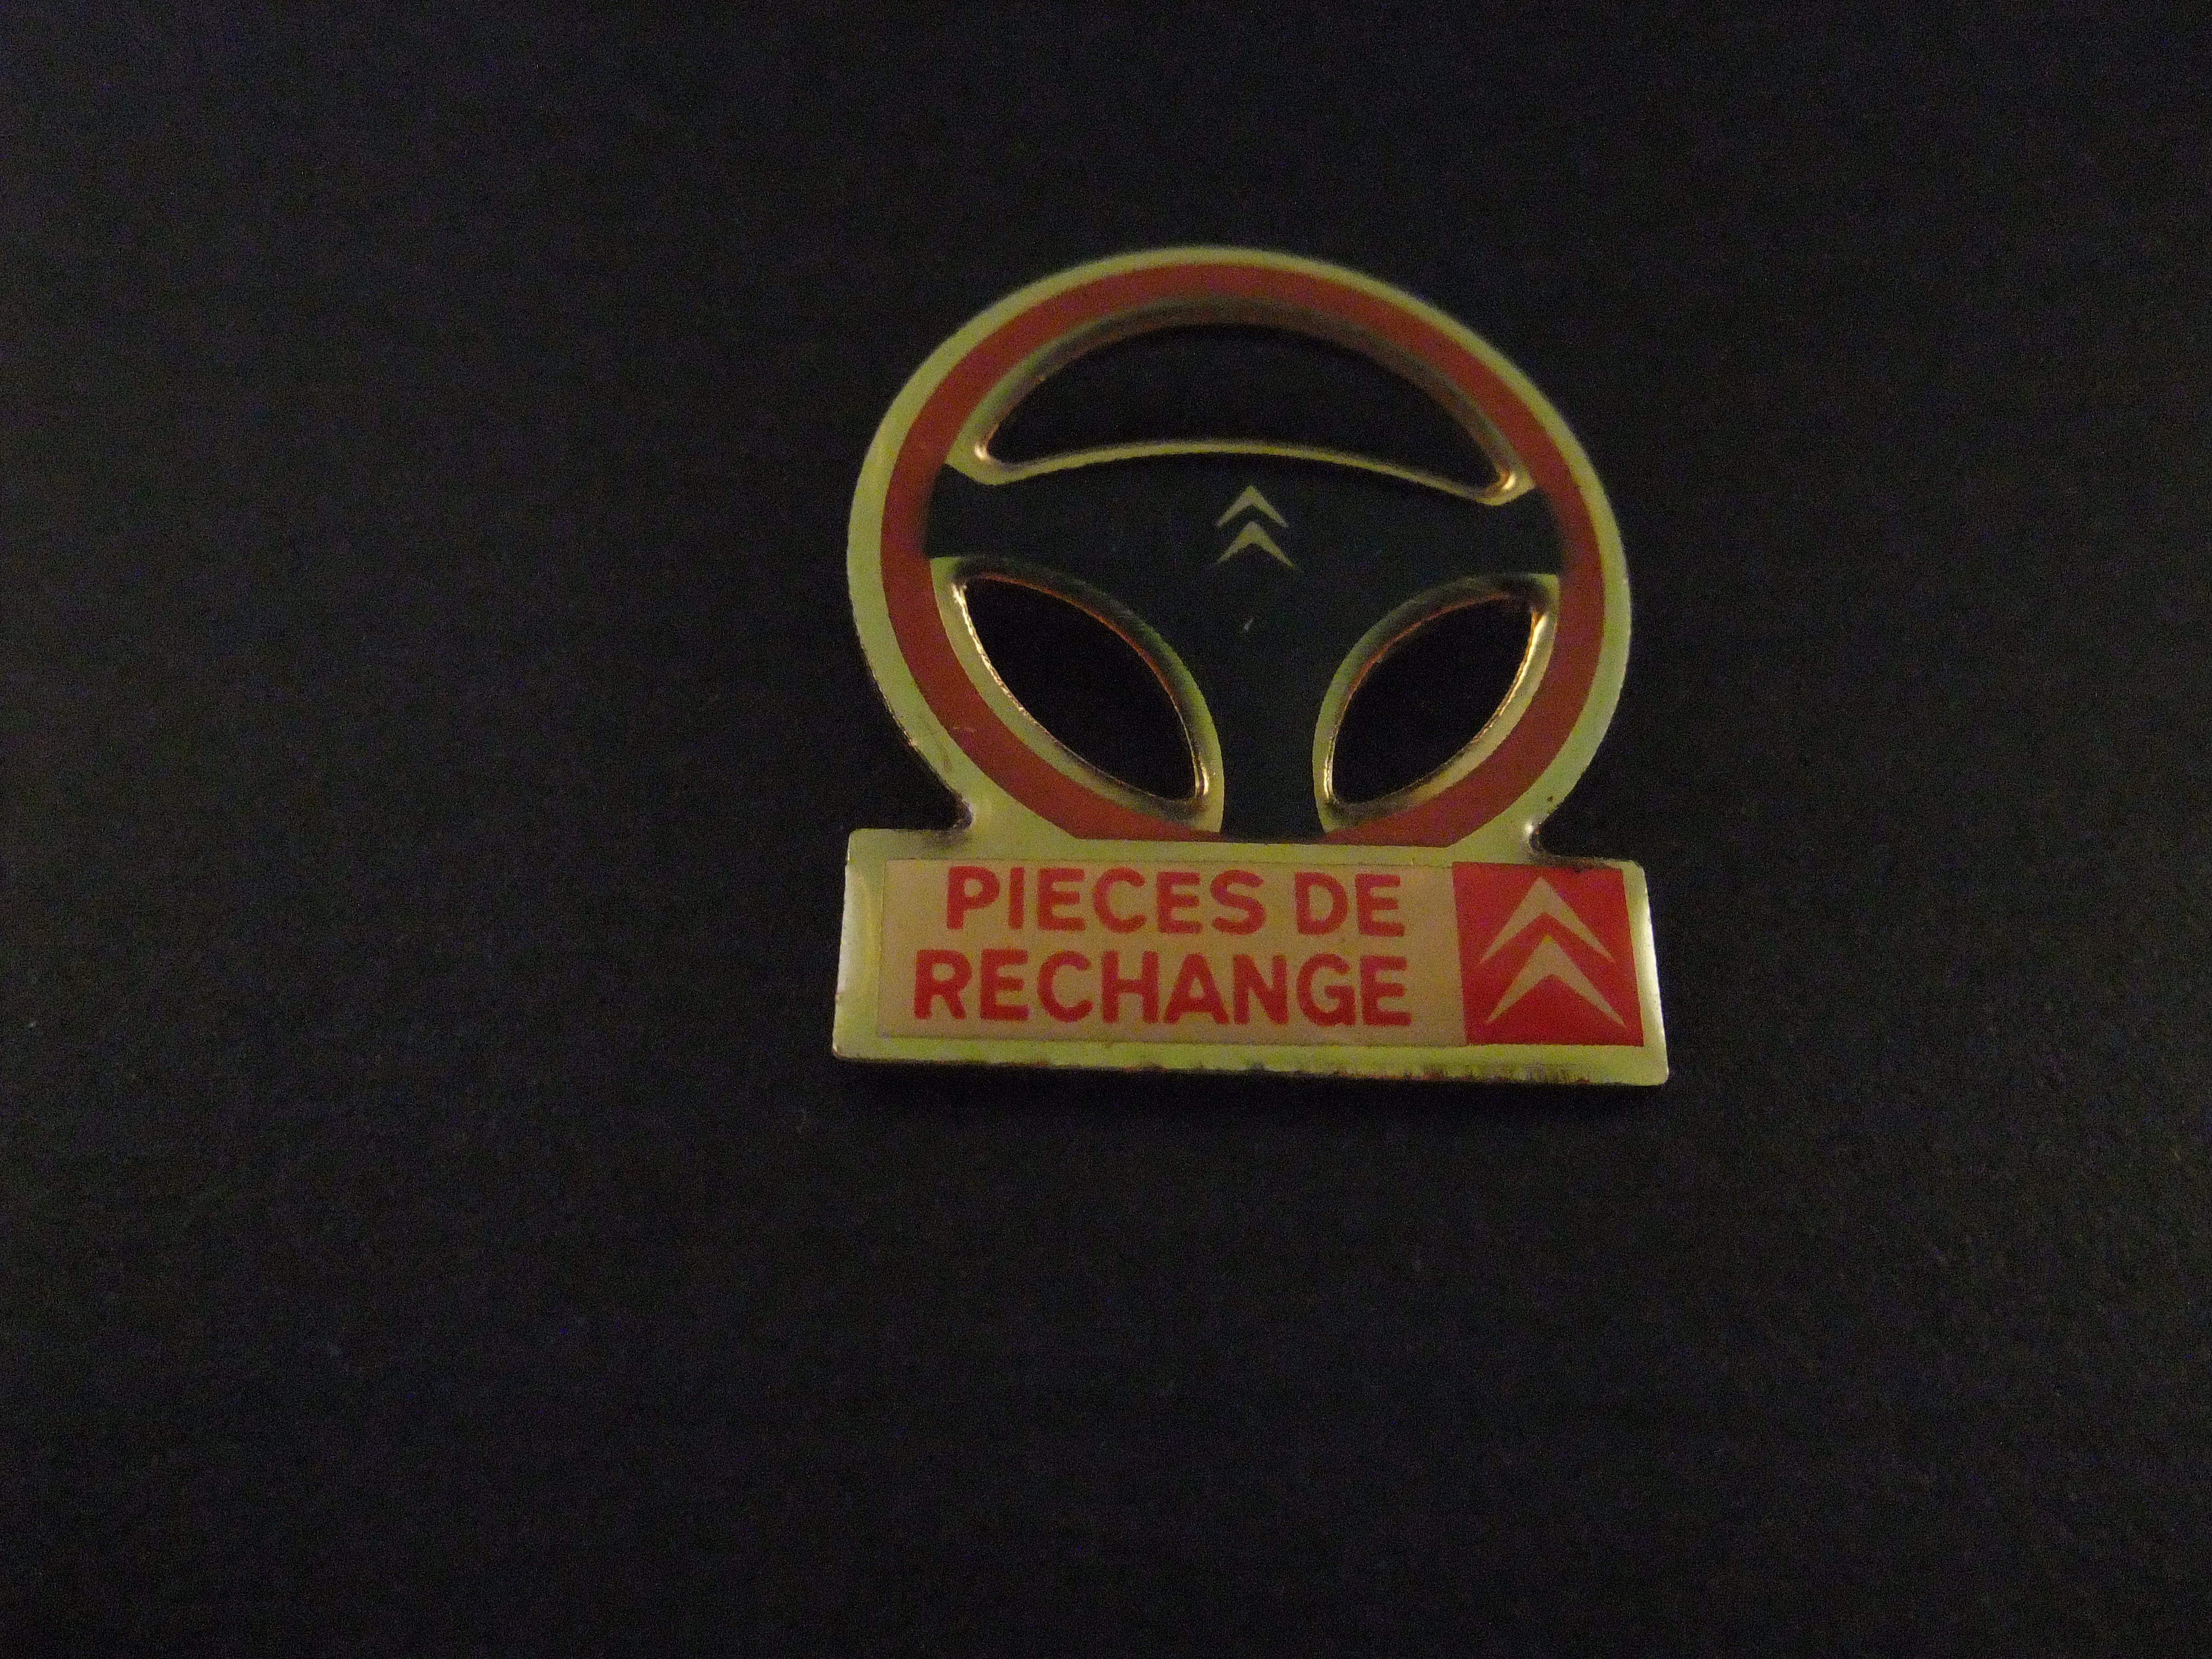 Citroën Frans automerk (stuur) met logo